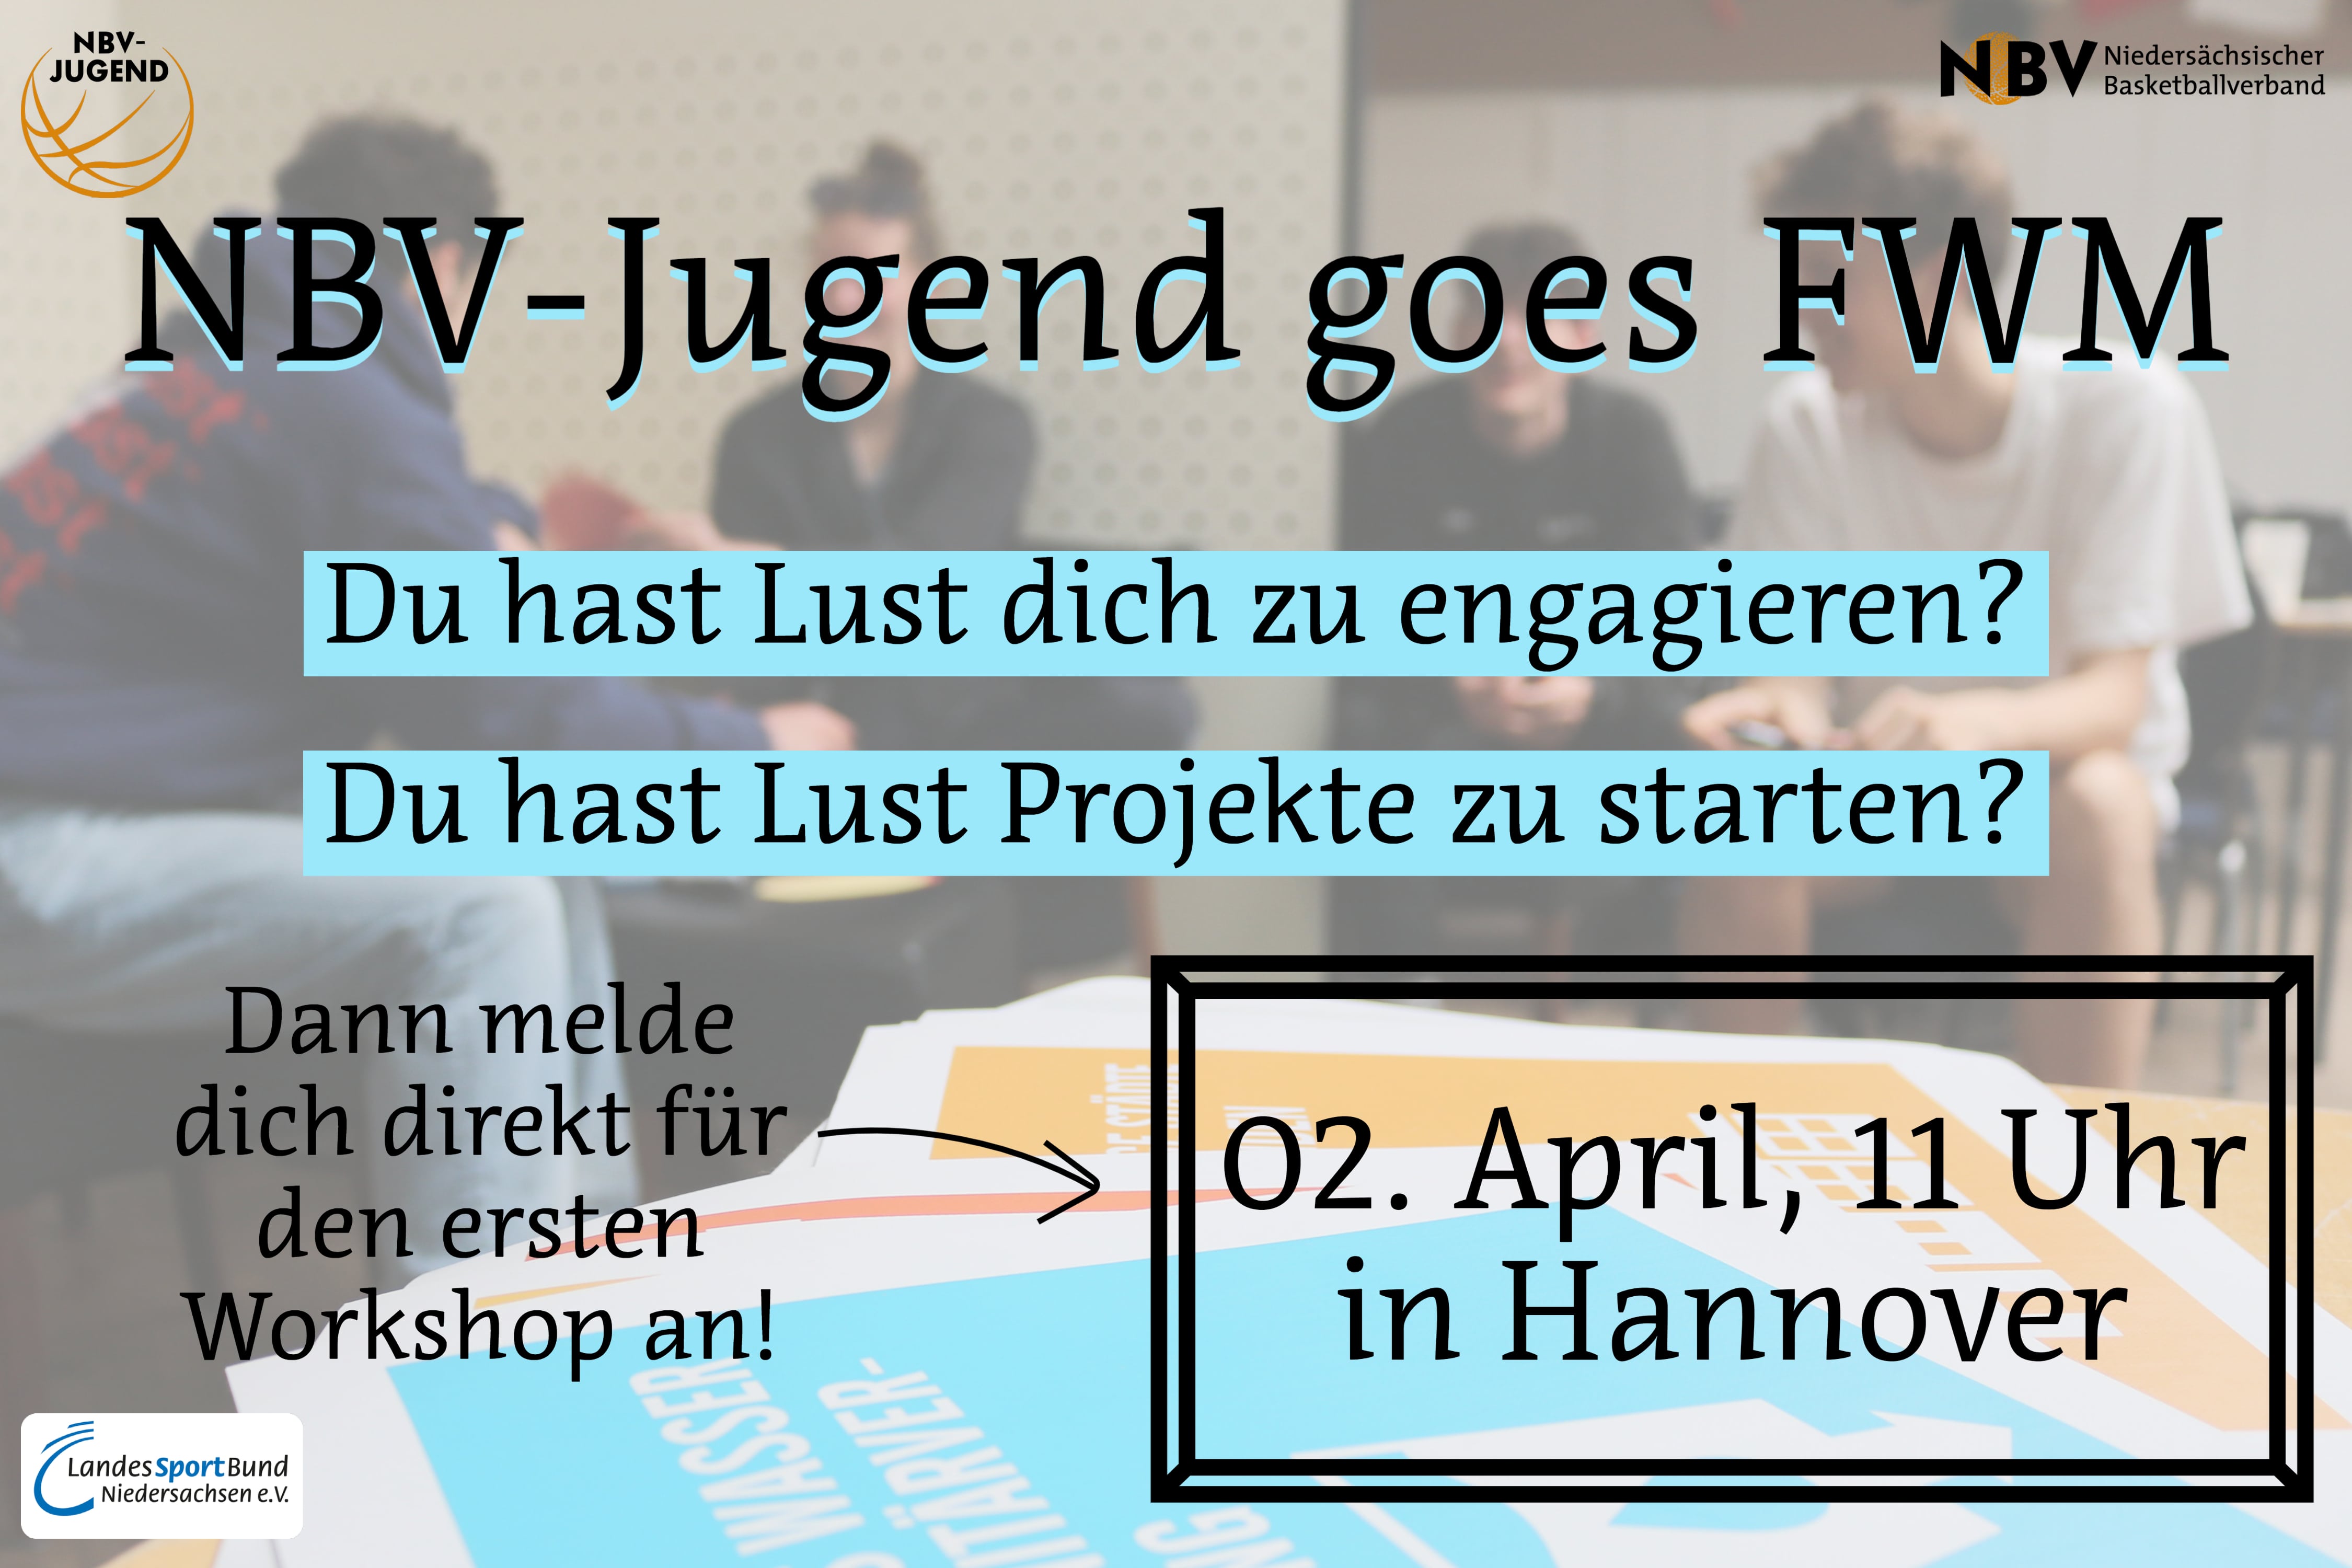 NBV-Jugend goes FWM - Workshop Nr. 1